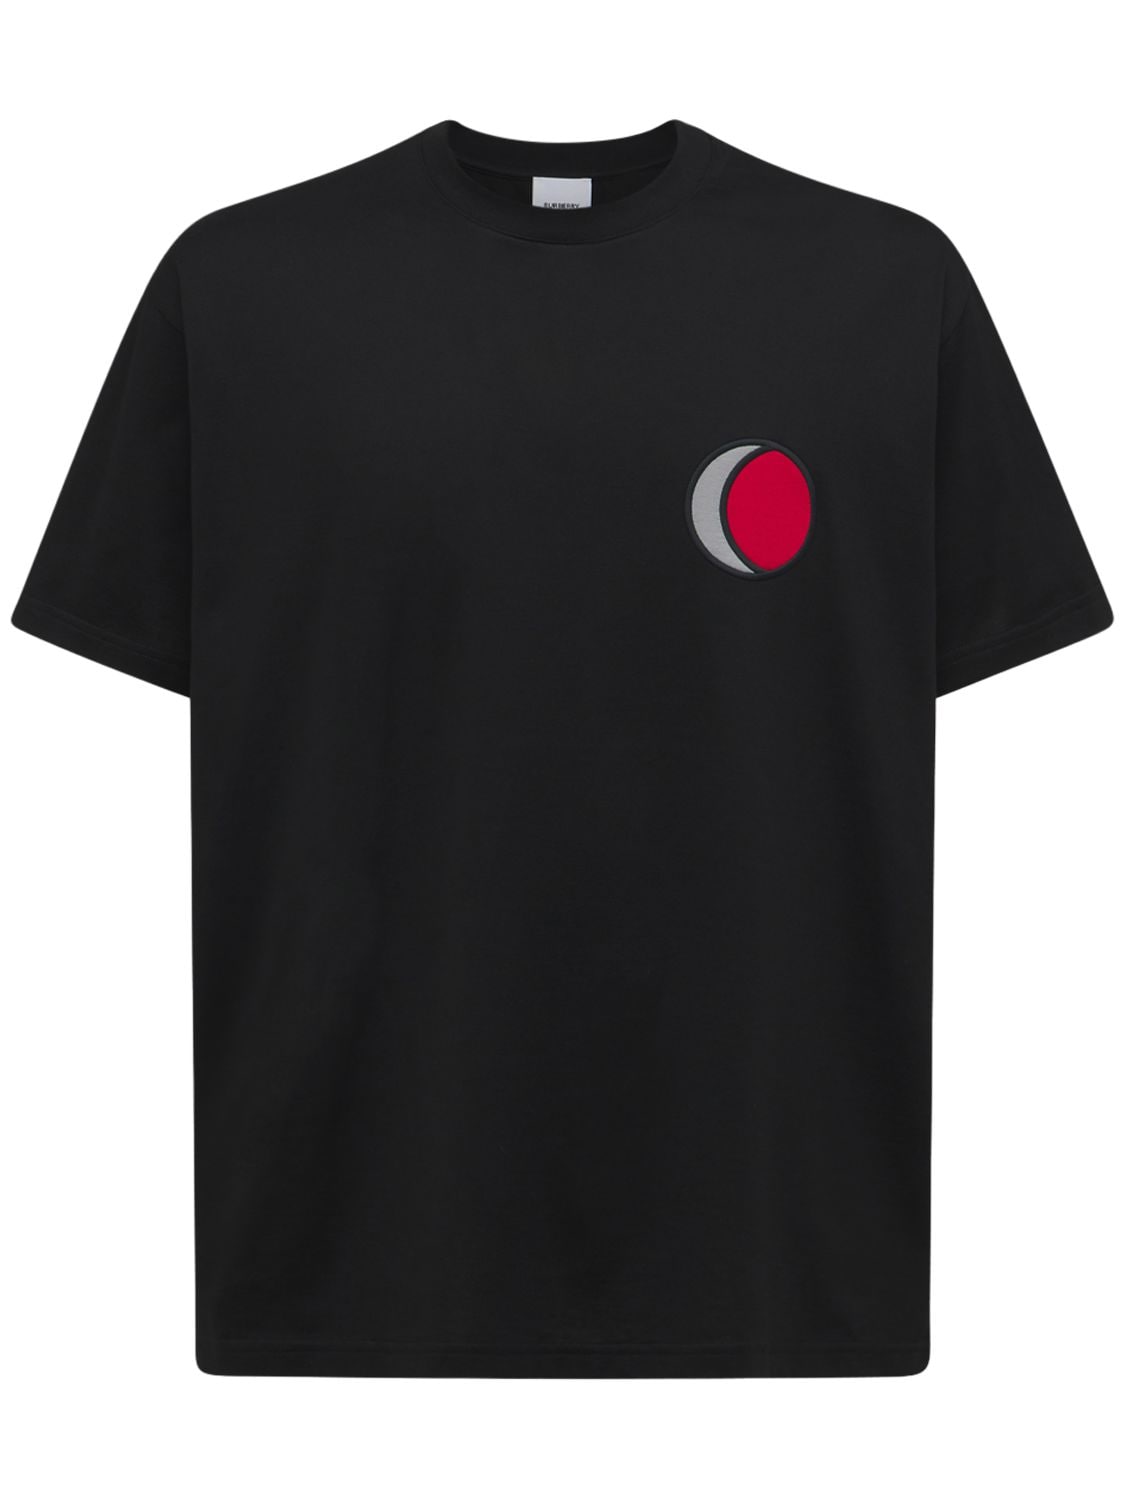 Burberry Ying Yang Print Cotton Jersey T-shirt In Black